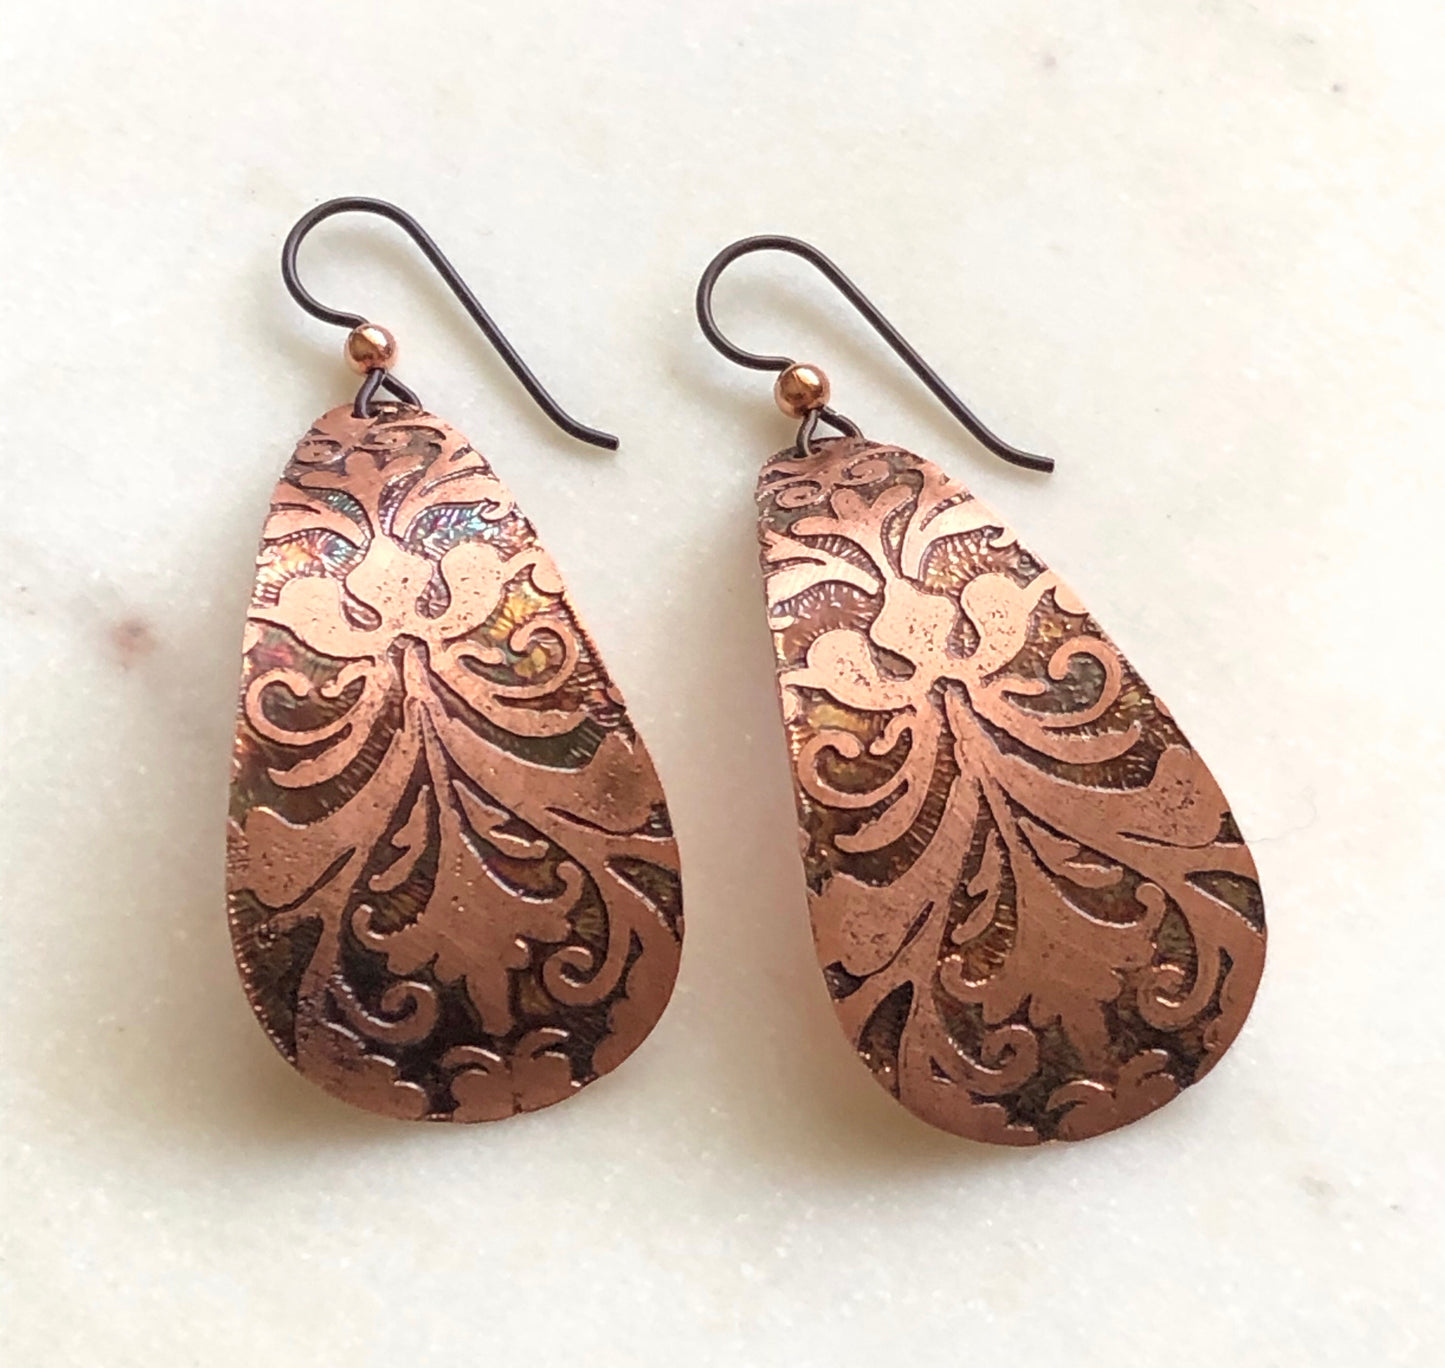 Acid etched copper large teardrop earrings